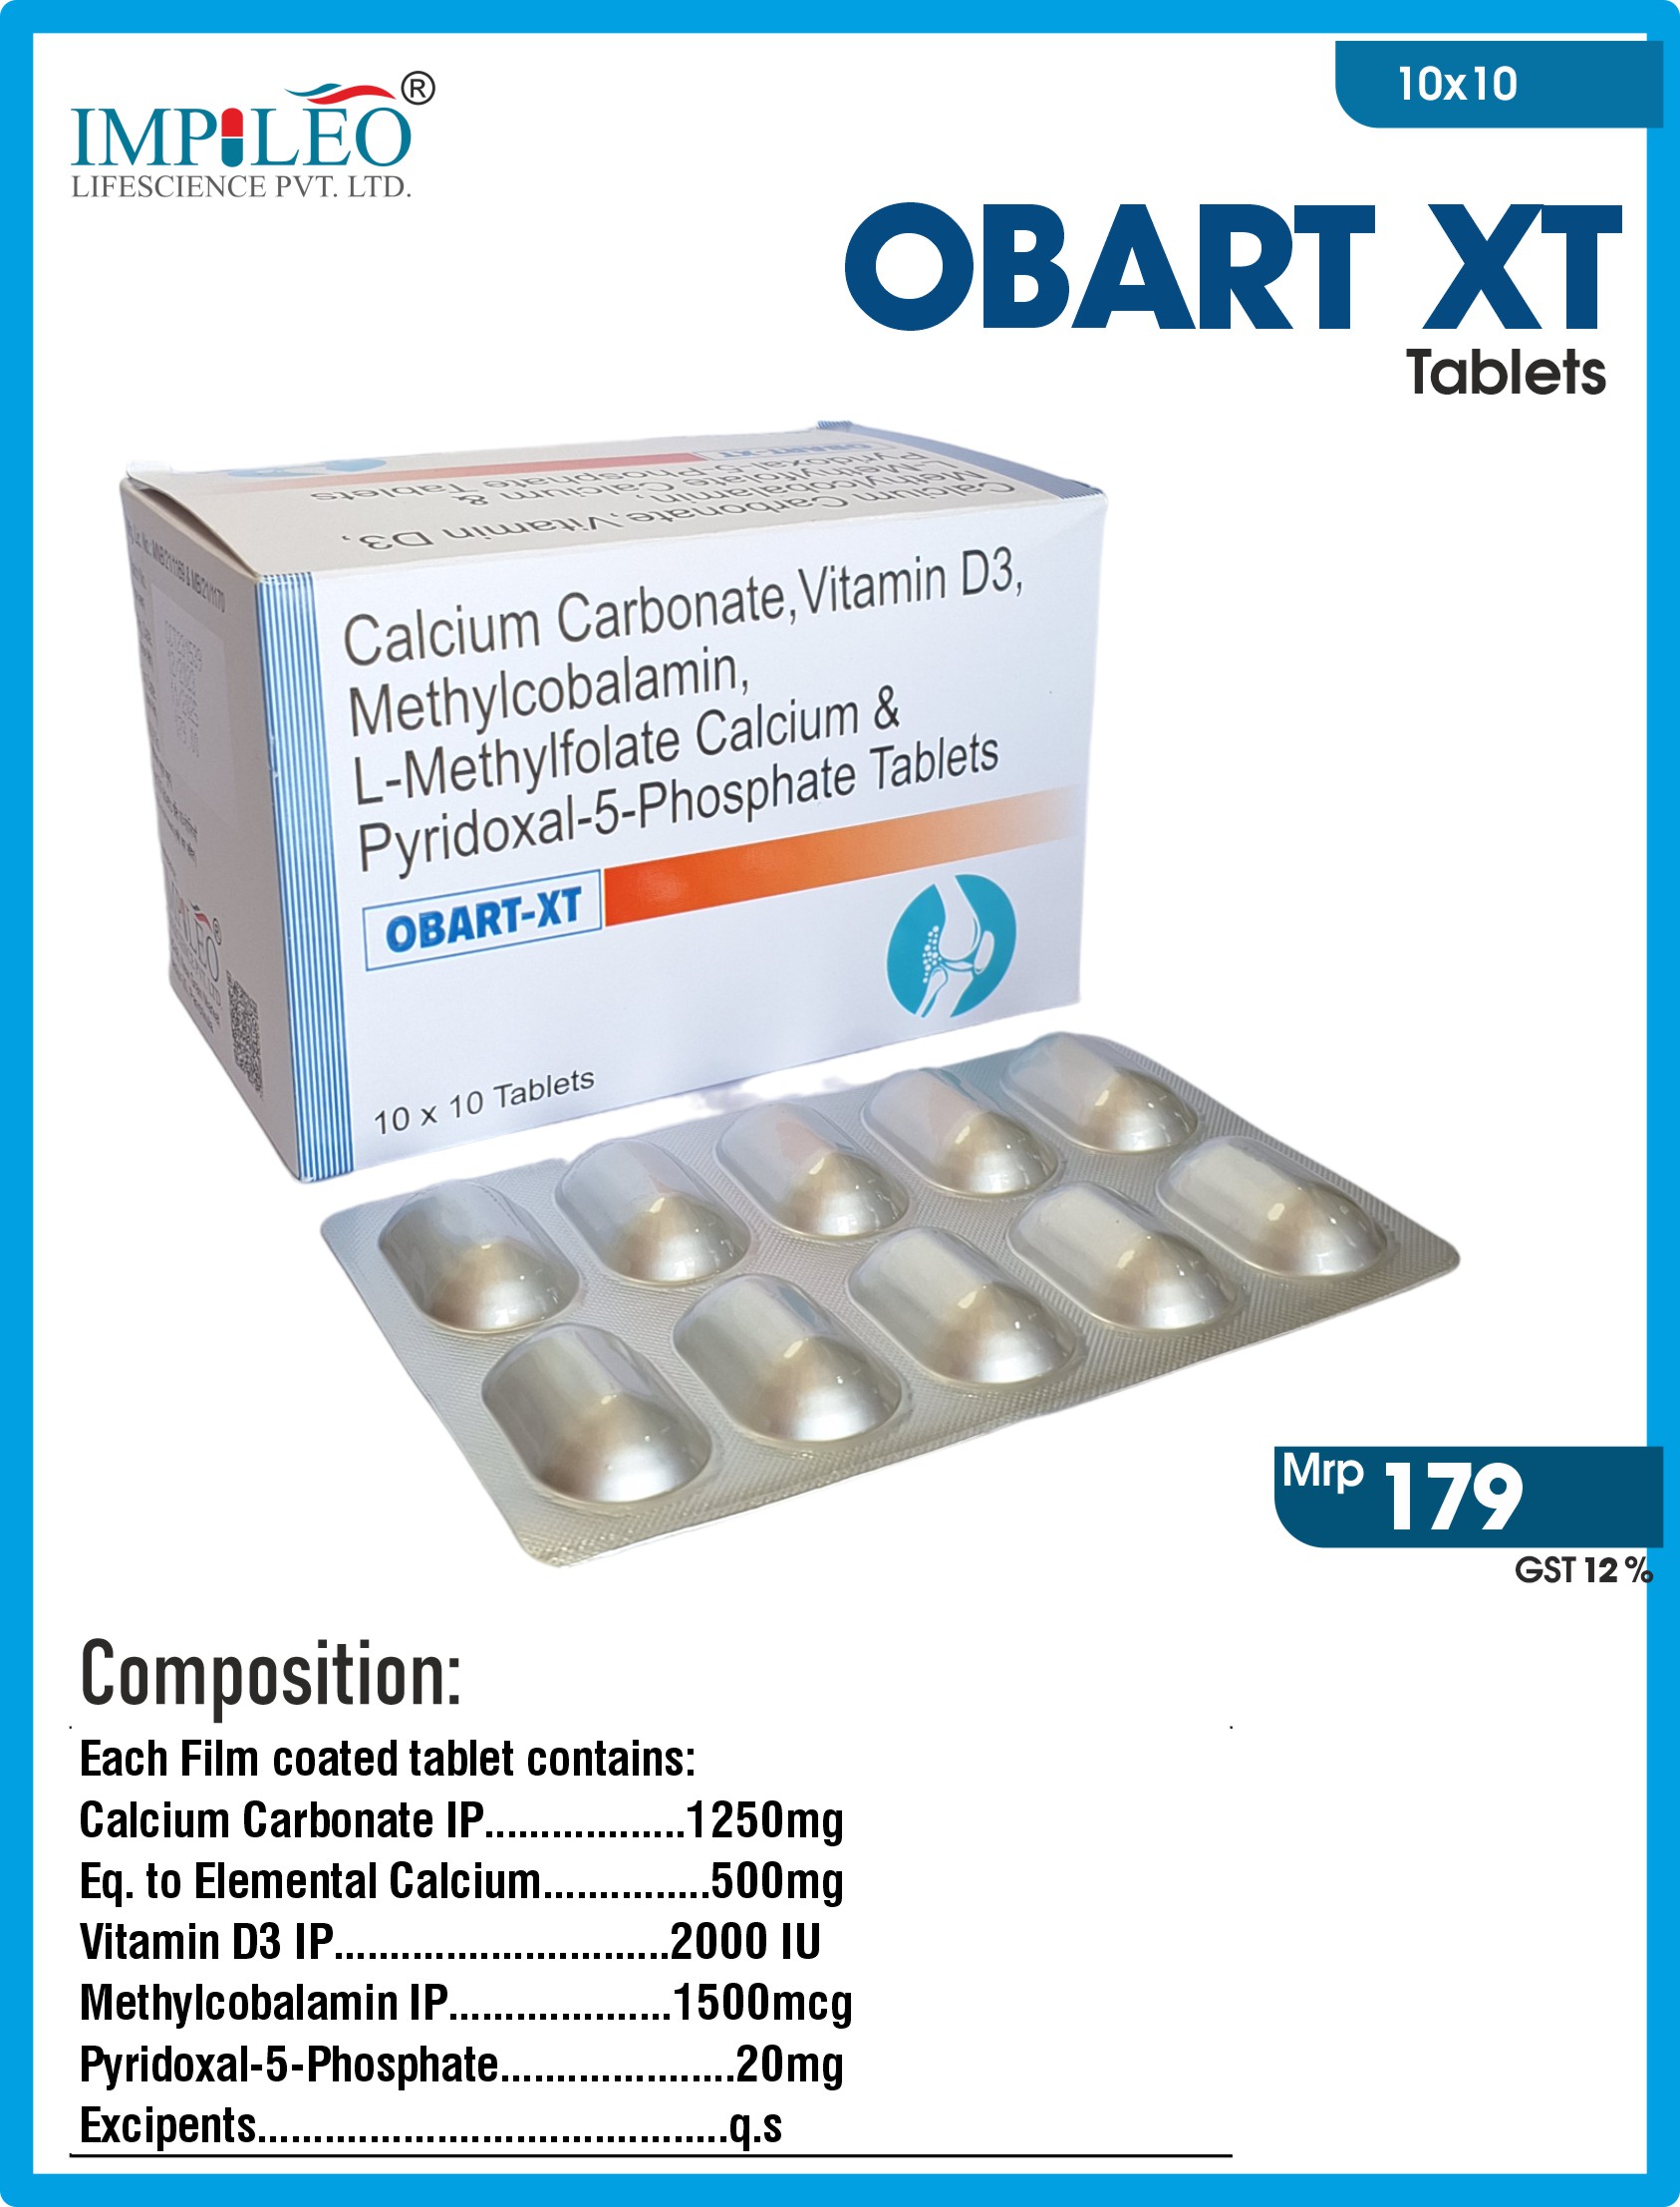 Leading PCD Pharma Franchise Provides Calcium Carbonate + Vitamin D3 + Methylcobalamin + Pyridoxal-5-Phosphate (OBART XT) Tablets